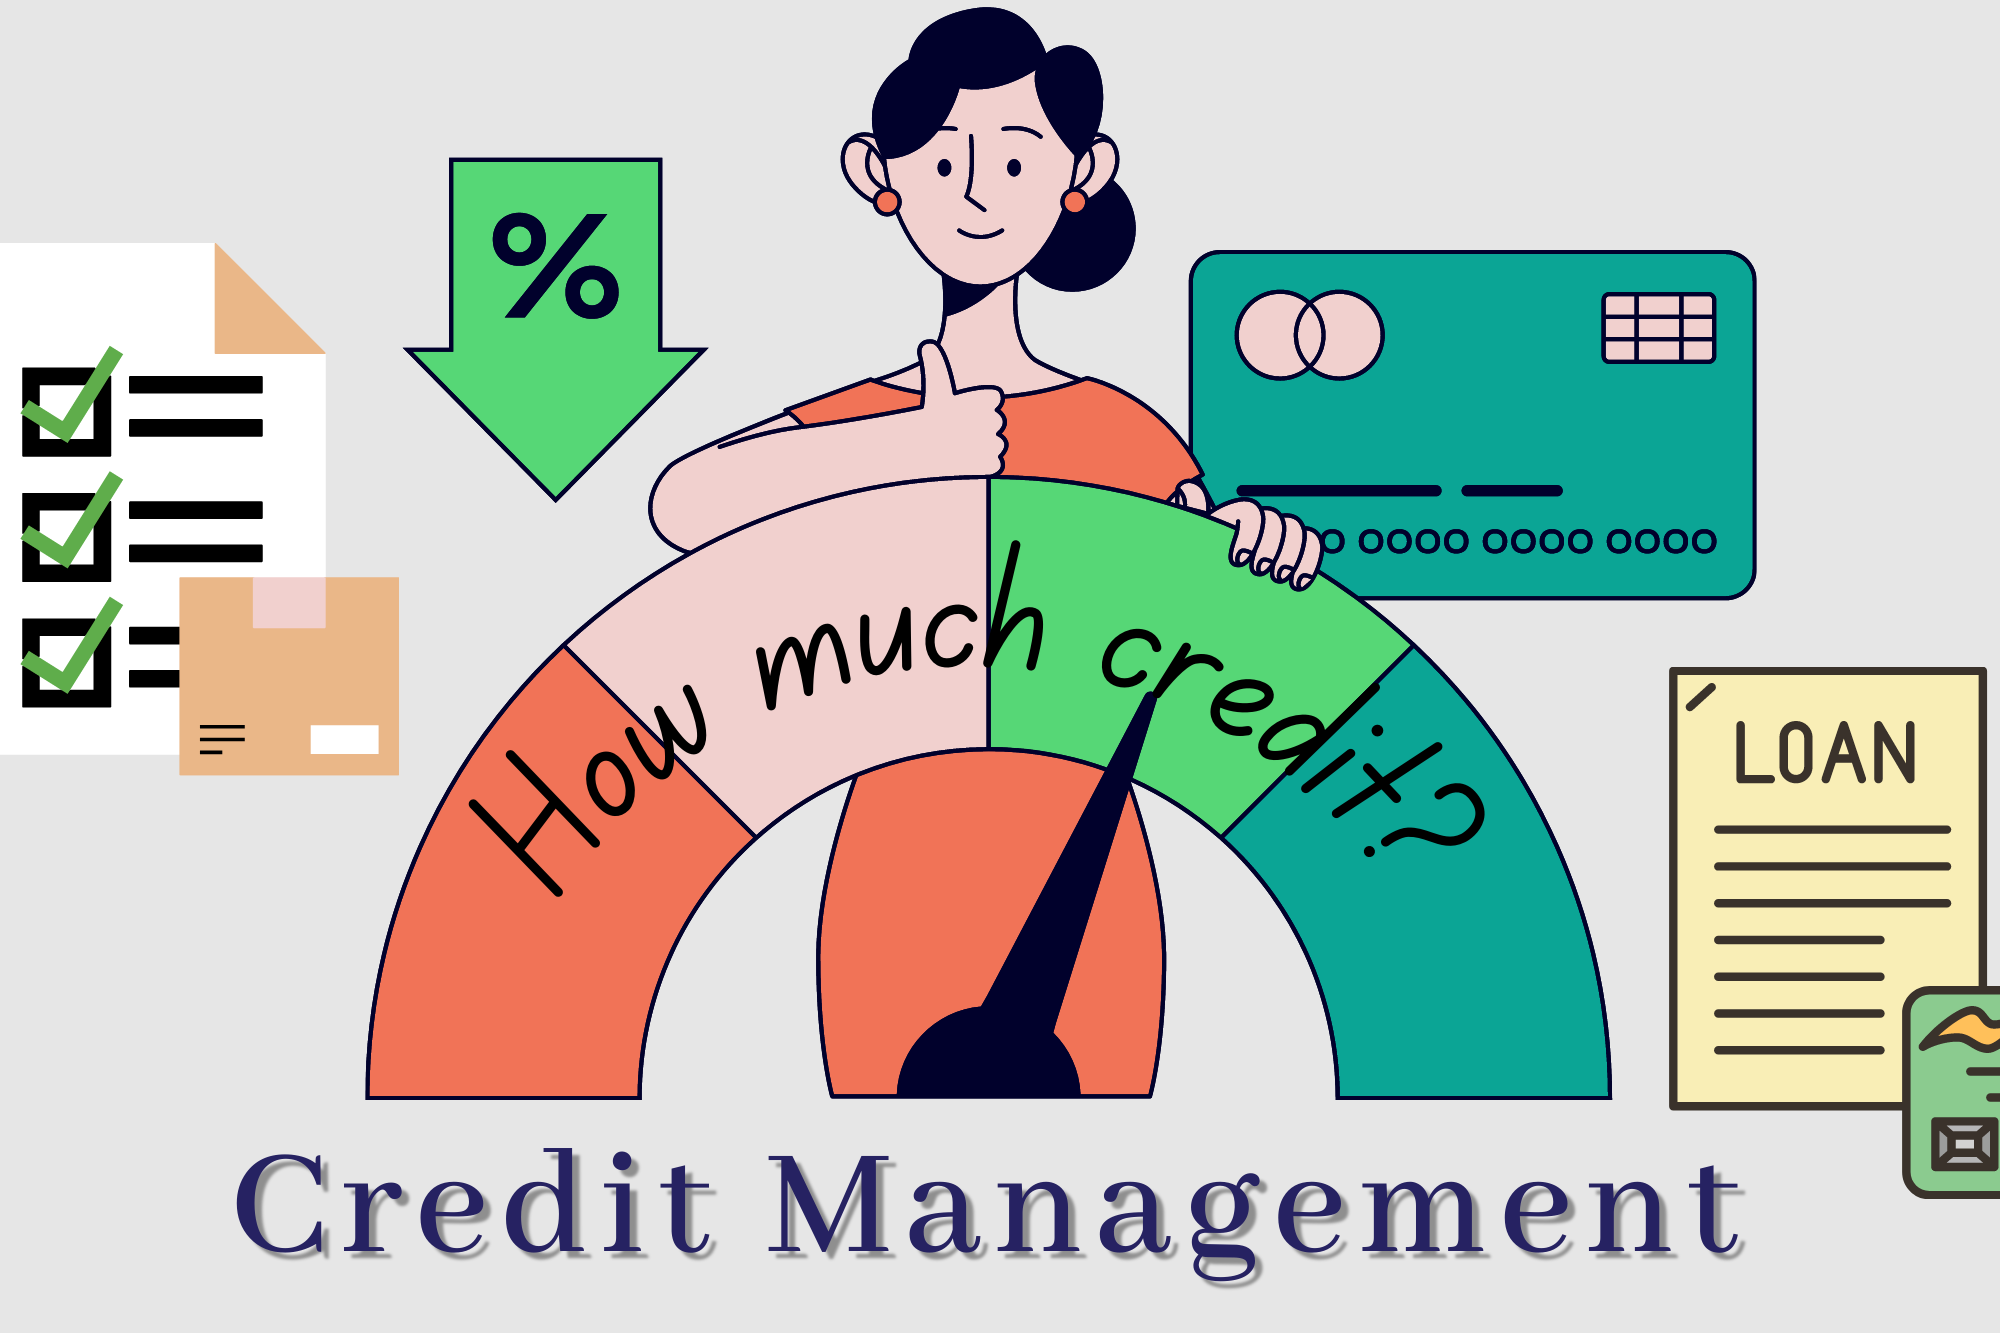 Career in Credit Management